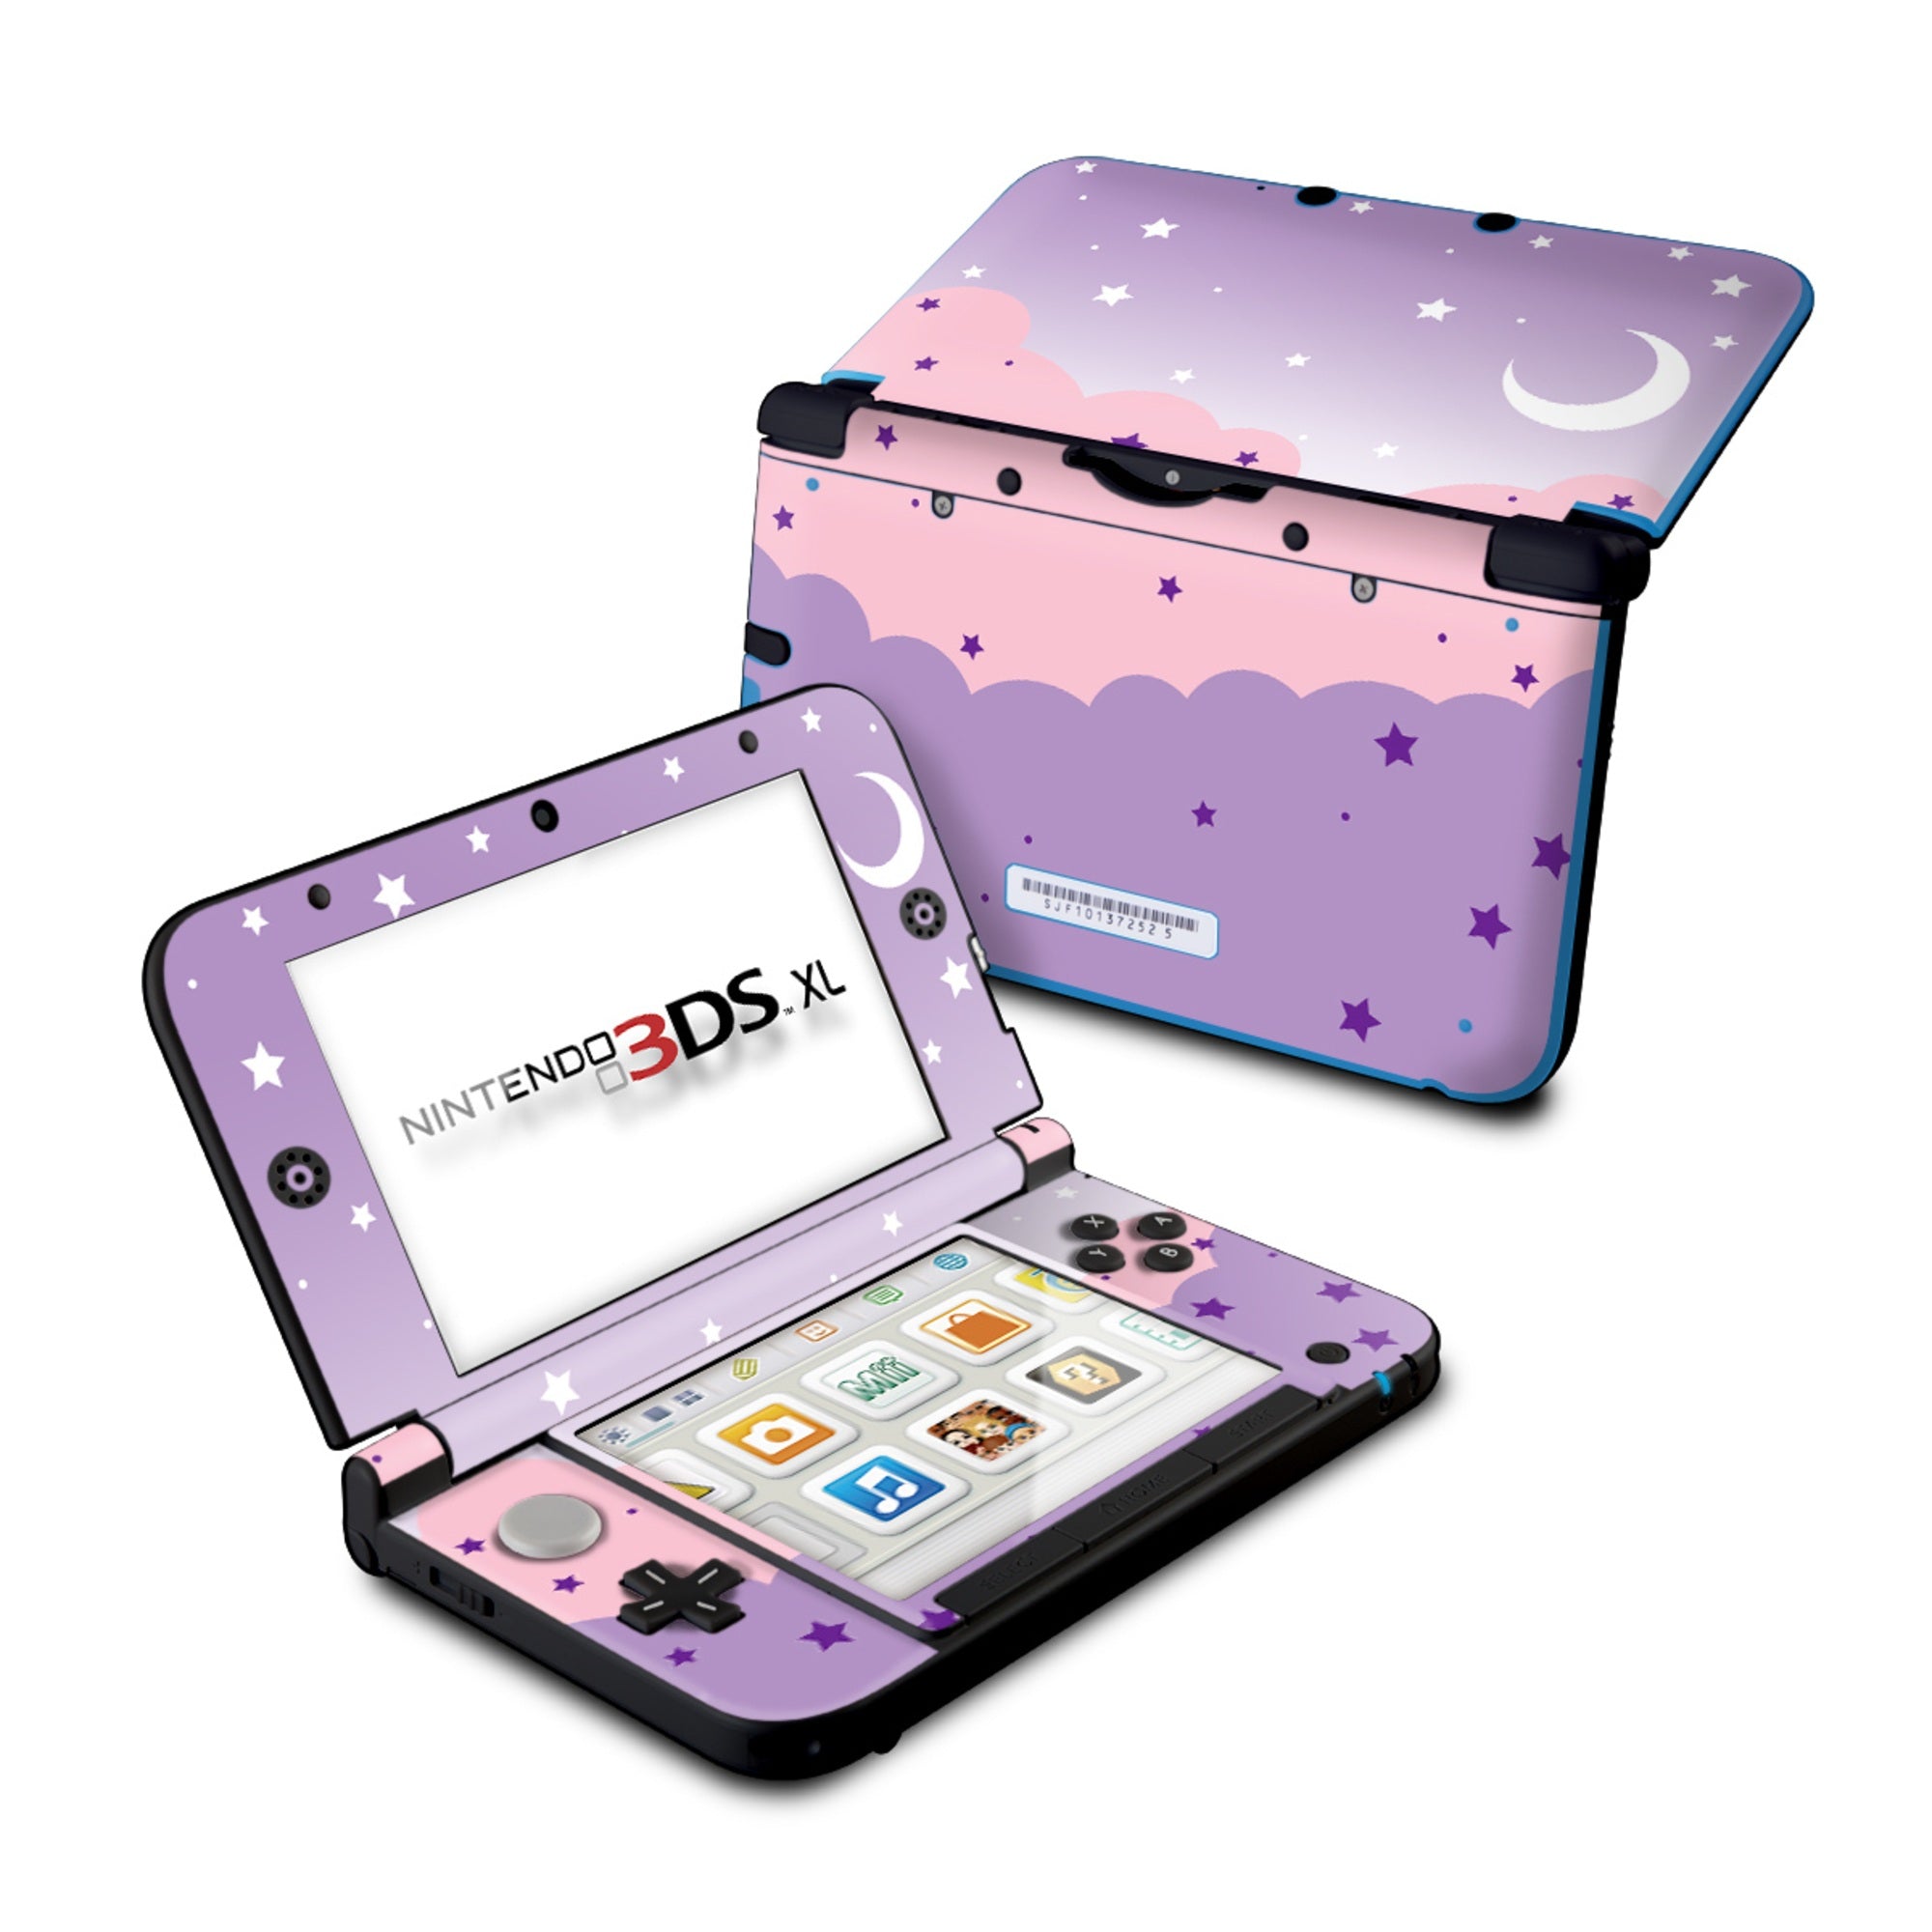 Dreaming - Nintendo 3DS XL Skin